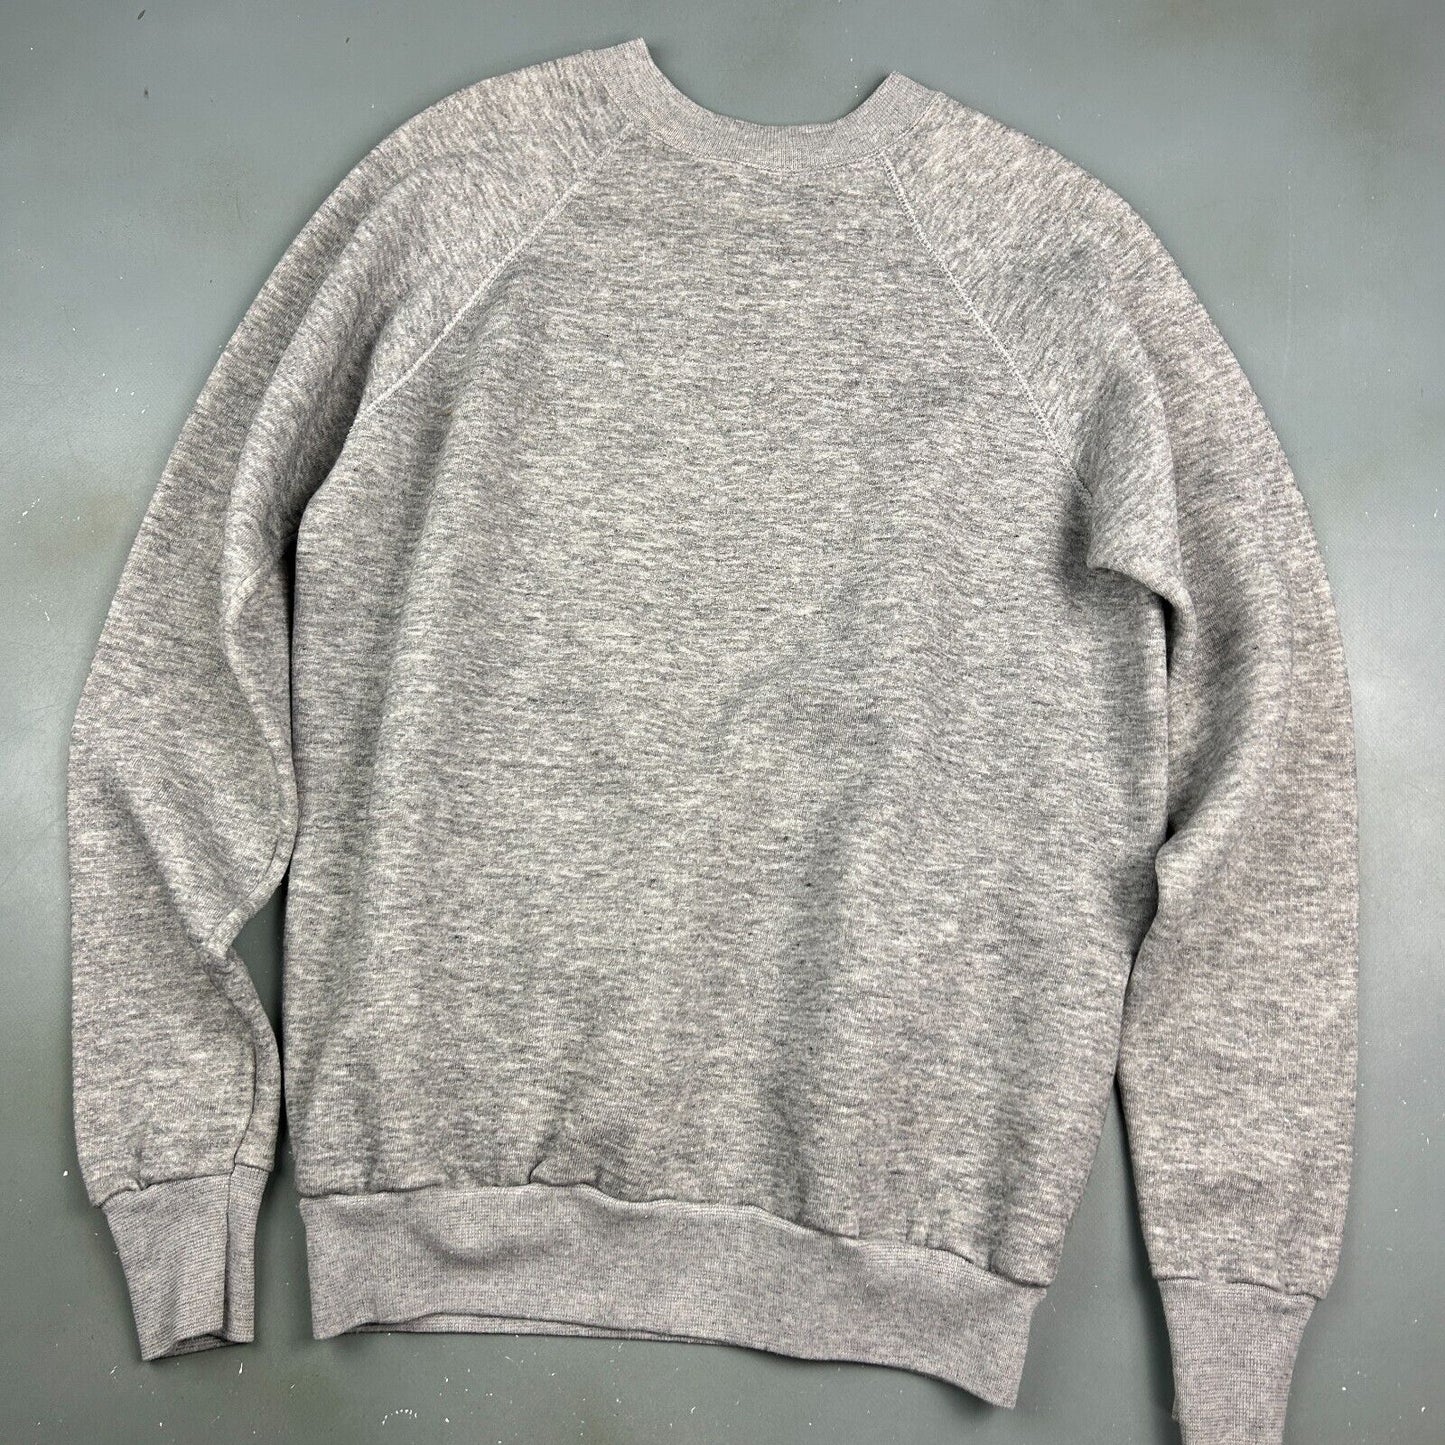 VINTAGE 80s | BLANK GREY Raglan Cut Crewneck Sweater sz M-L Adult